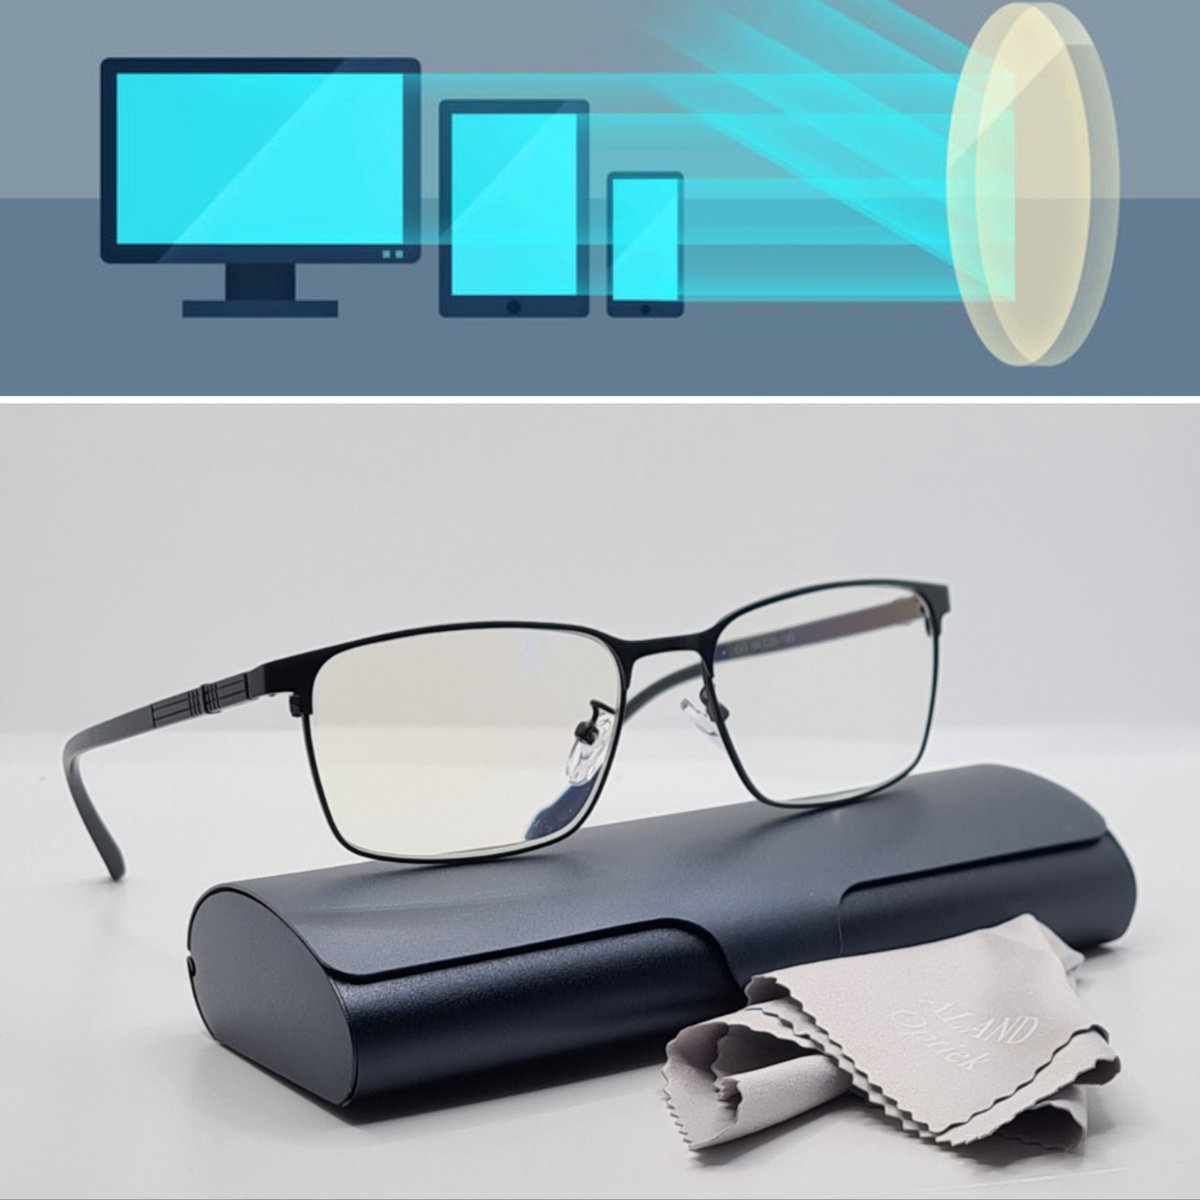 Unisex leesbril +1,0 met brillenkoker en microvezeldoekjes - Computerbril - Blauw Licht Filter Bril - Blue Light Filter Glasses - Multi Media Bril +1.0 - Lunettes de Lecture 5823 Aland optiek - Aland optiek